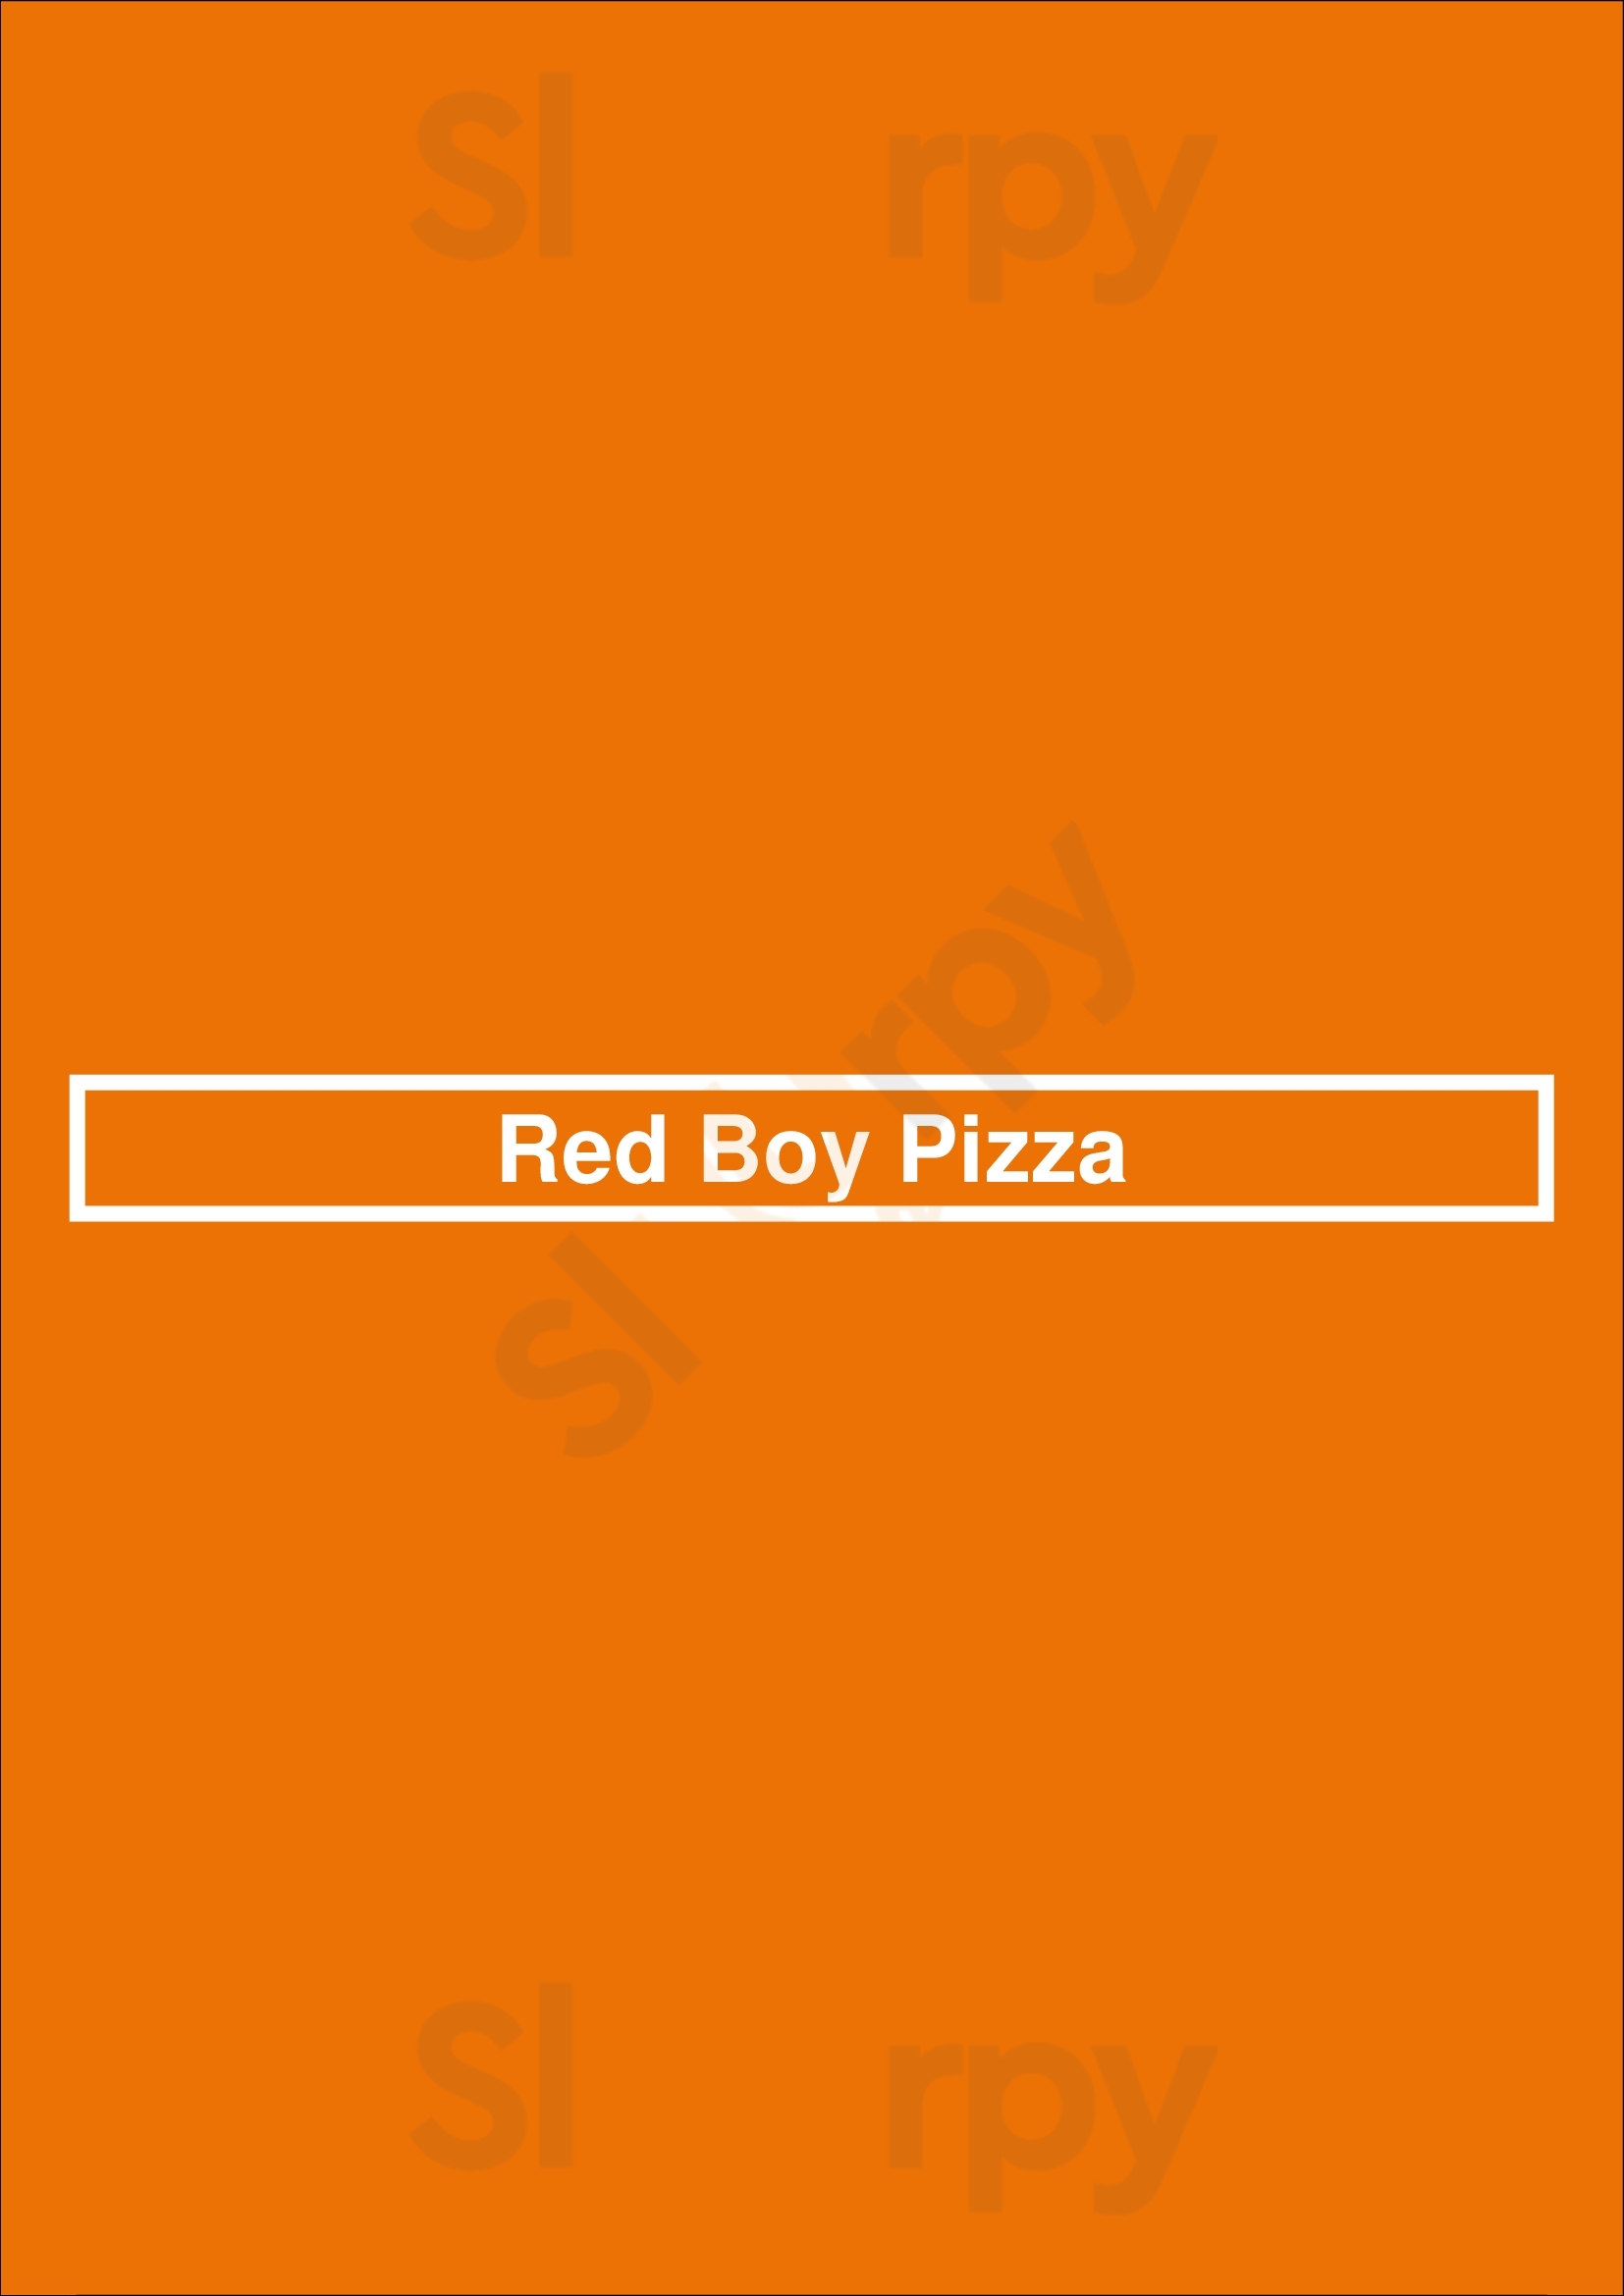 Red Boy Pizza Oakland Menu - 1